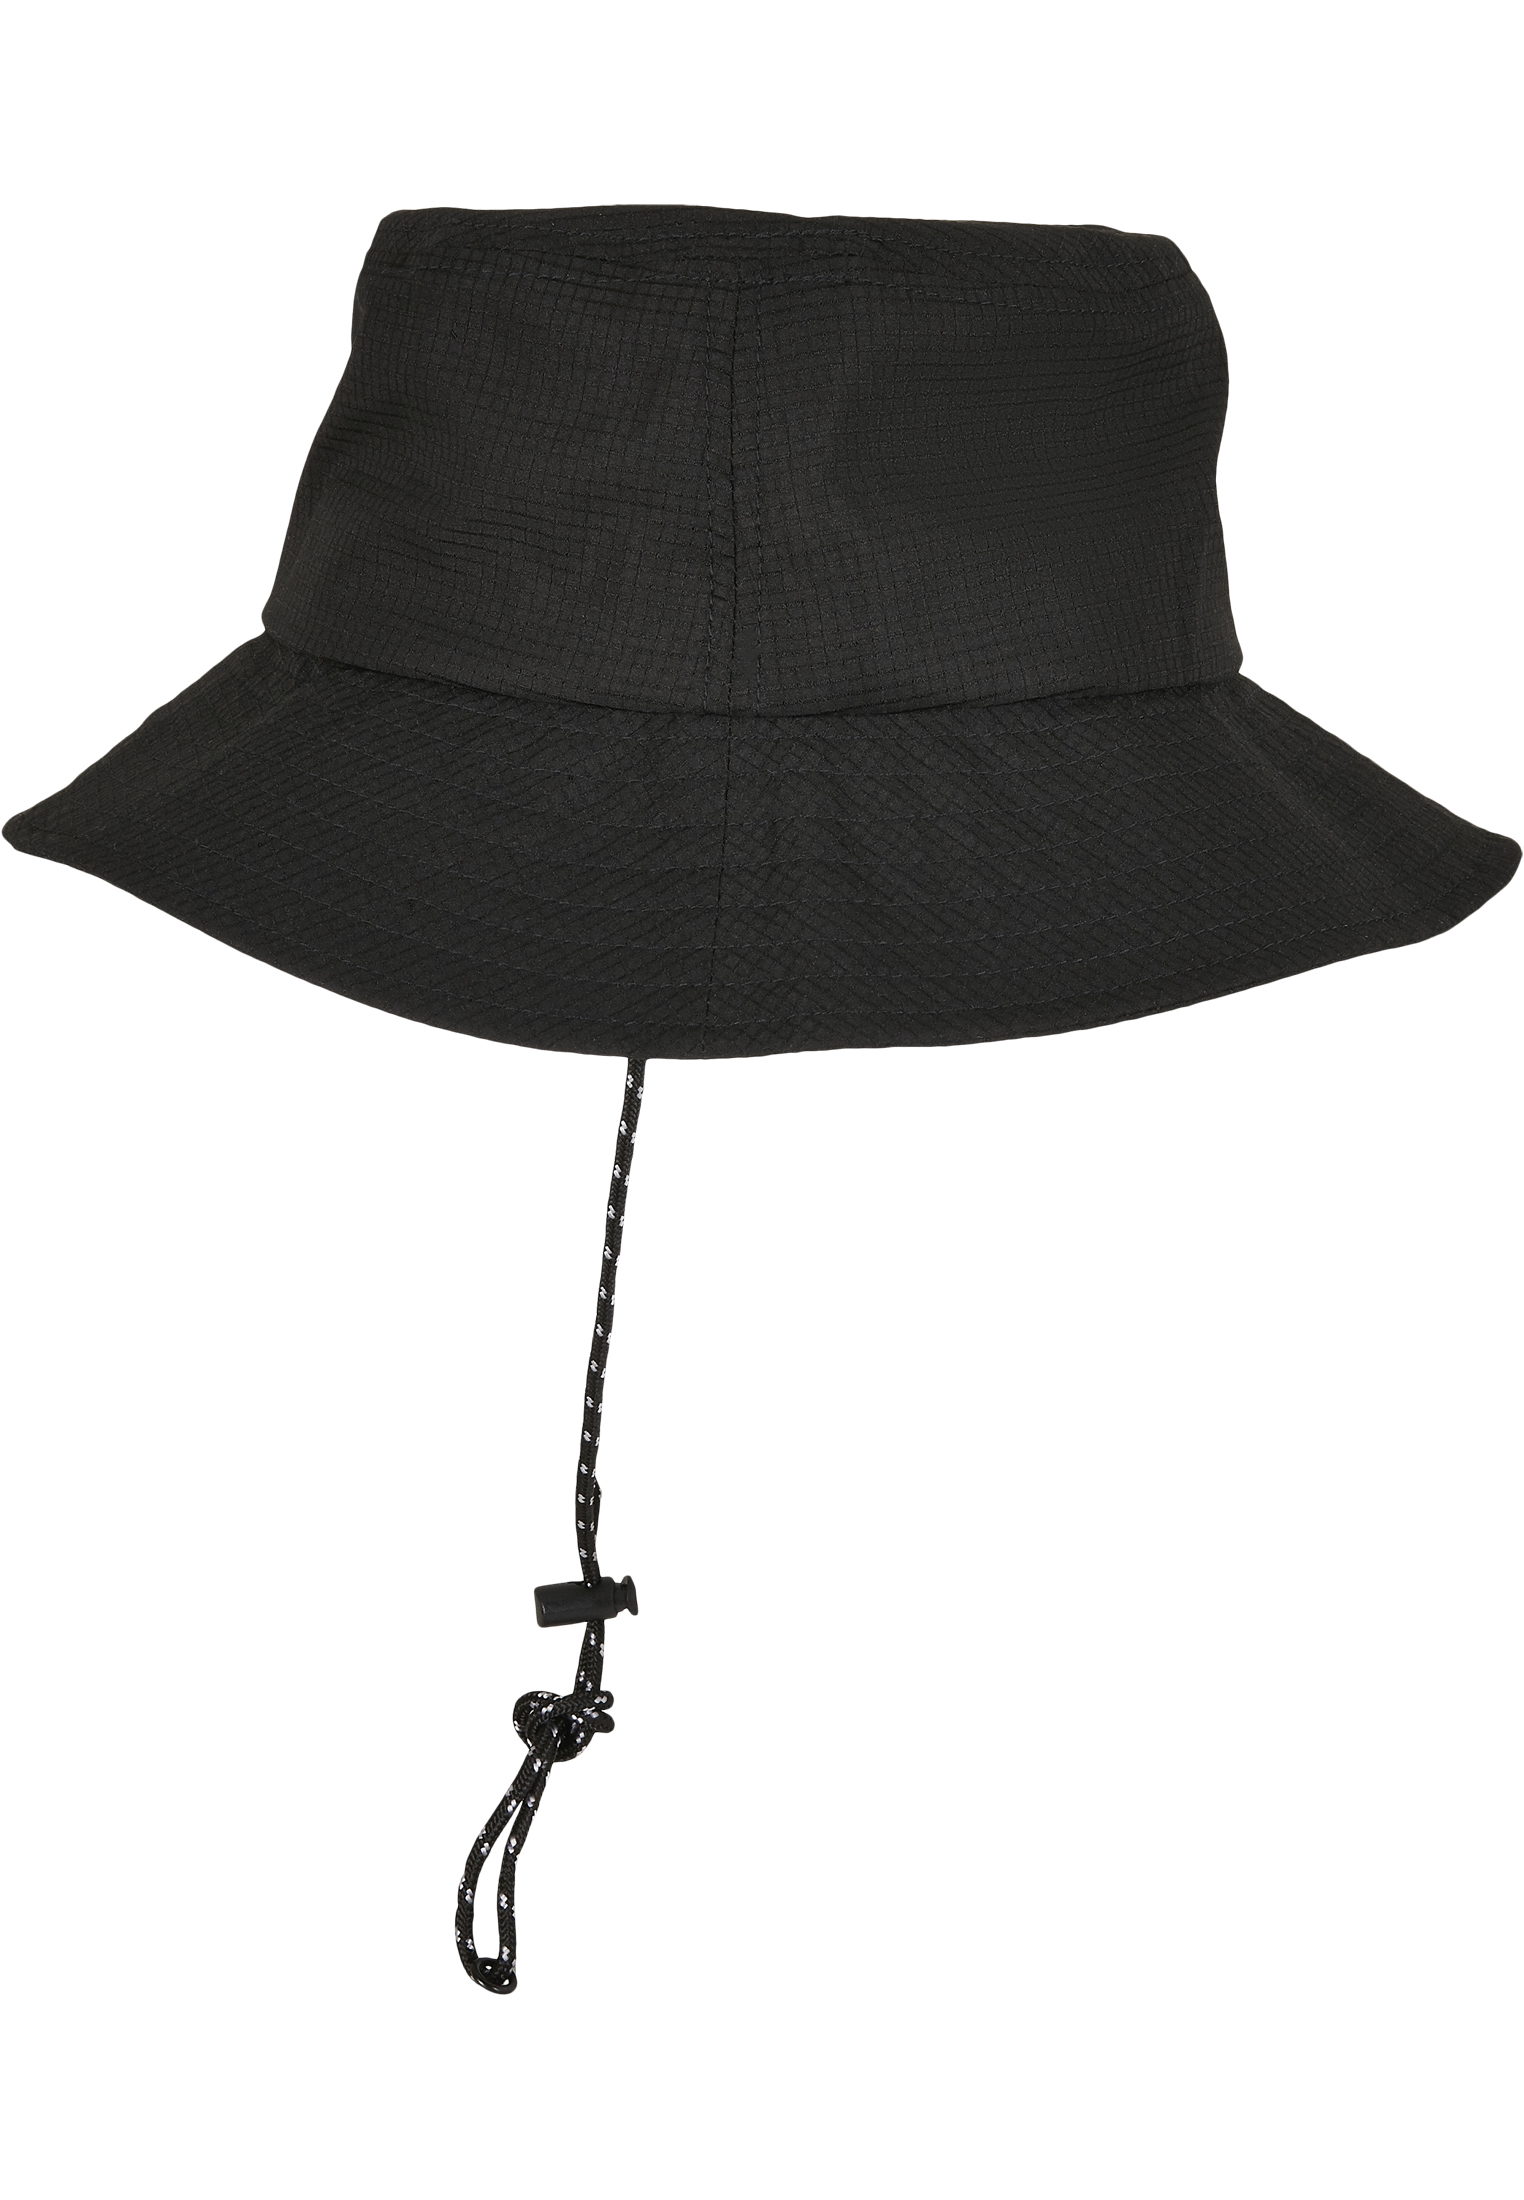 Hat-5003AB Bucket Flexfit Adjustable